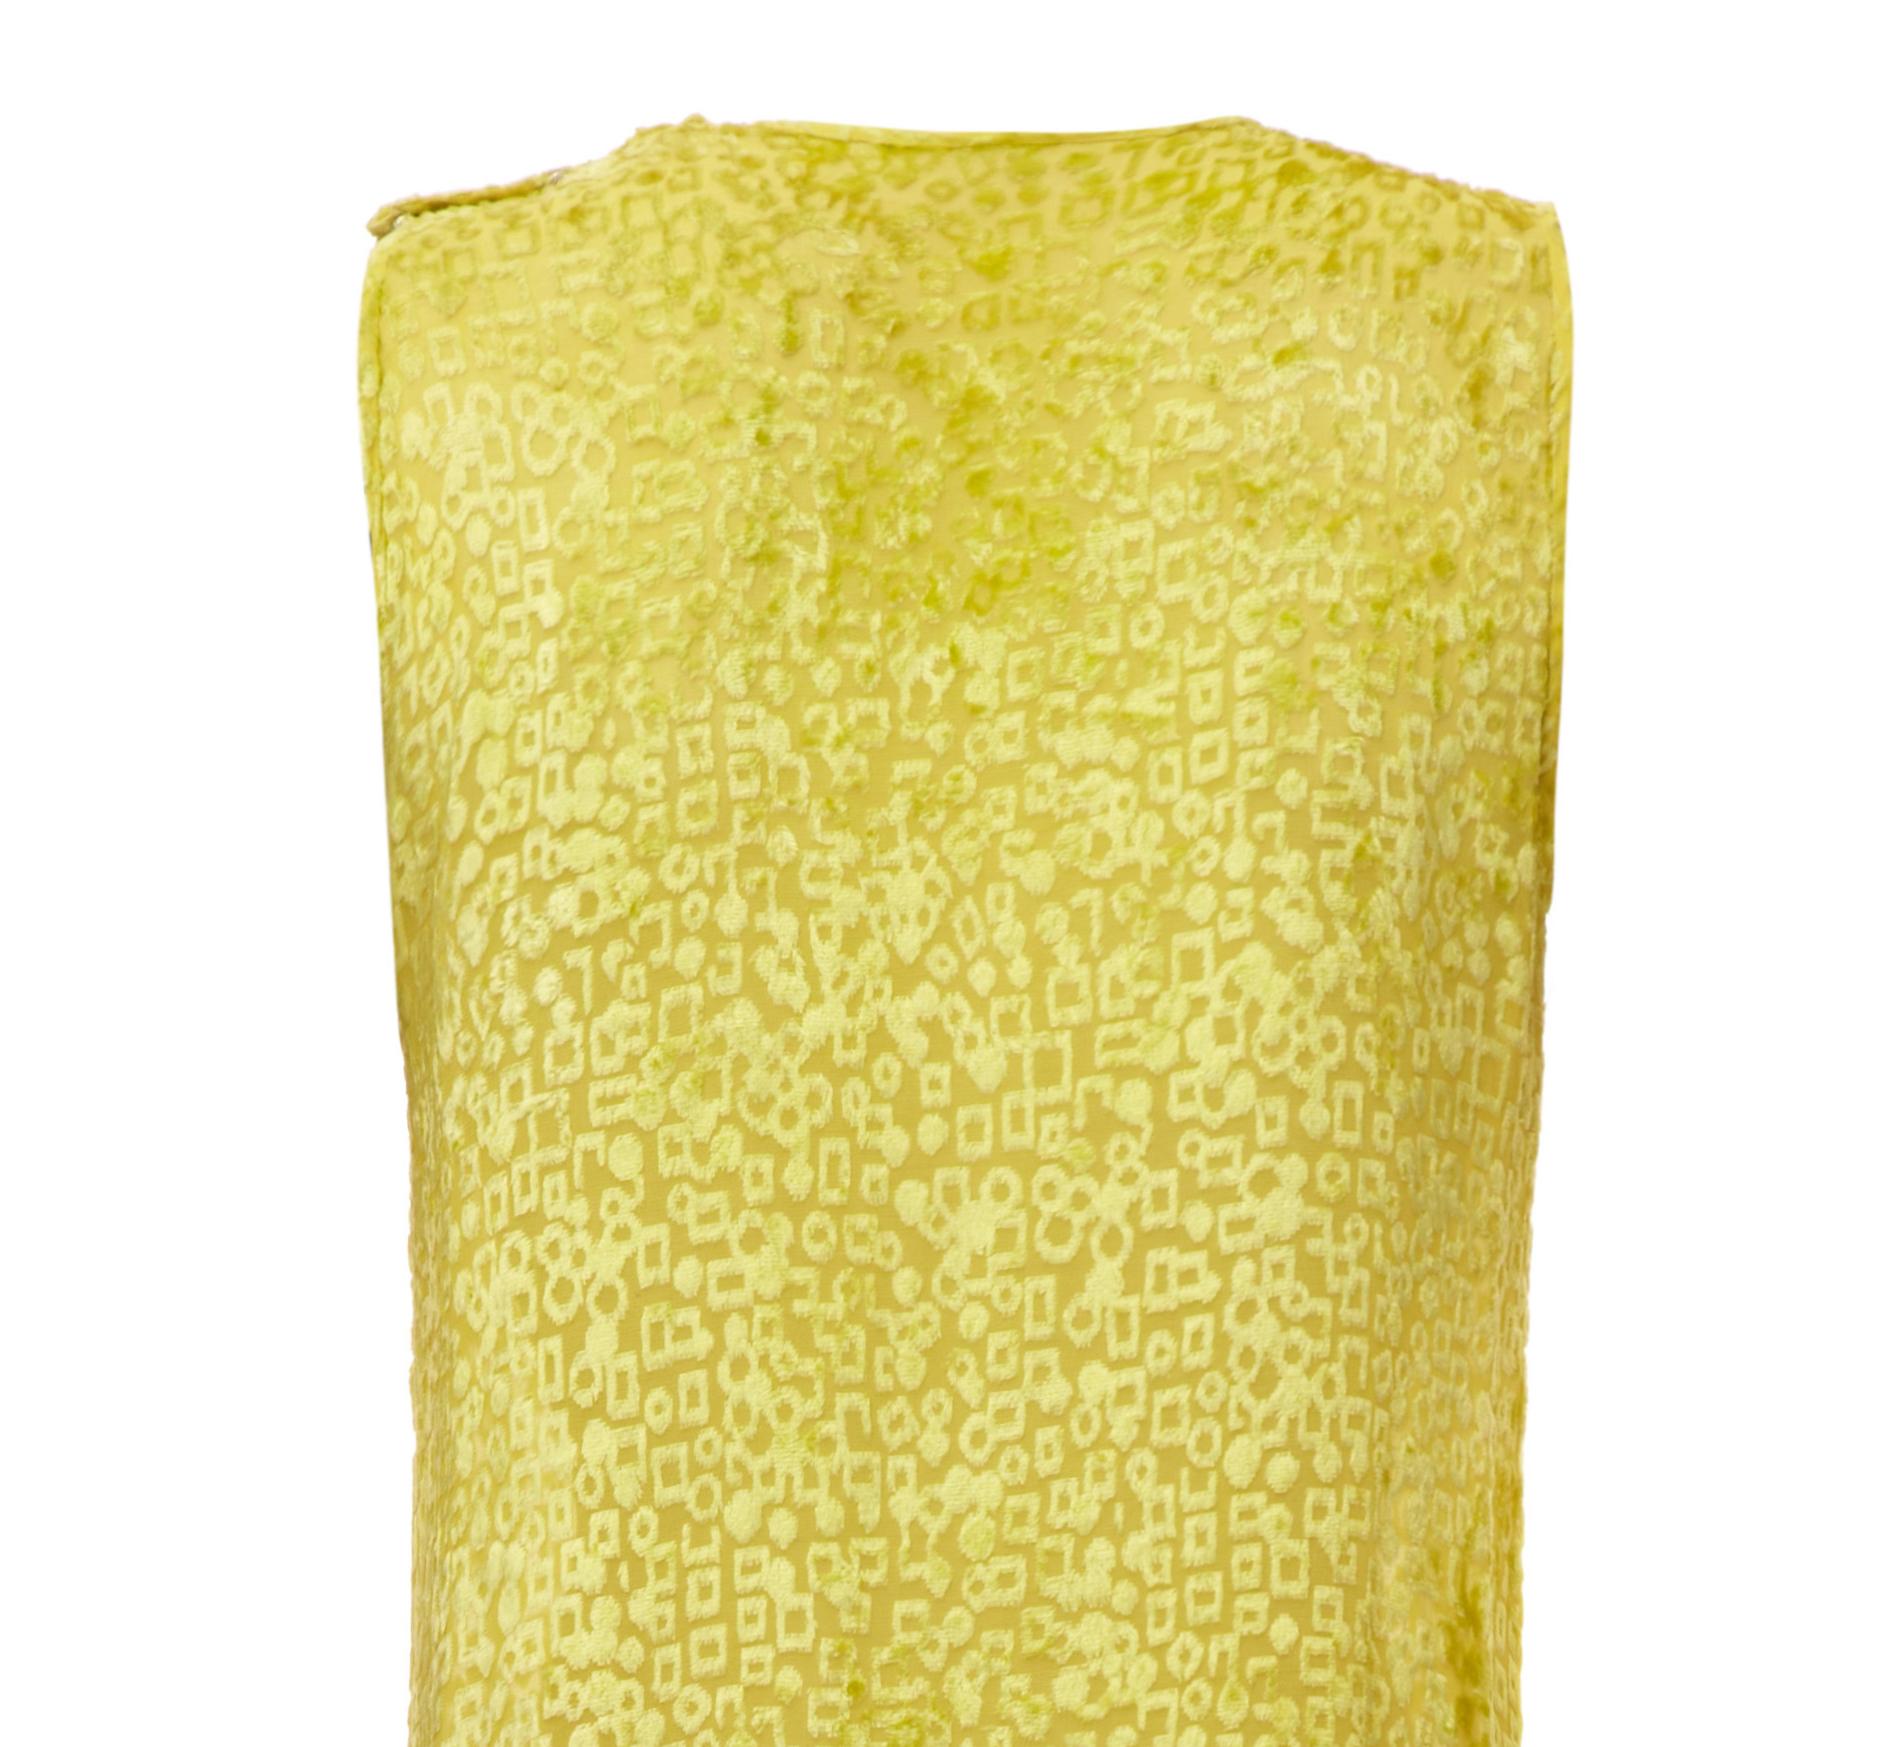 1920s yellow dress